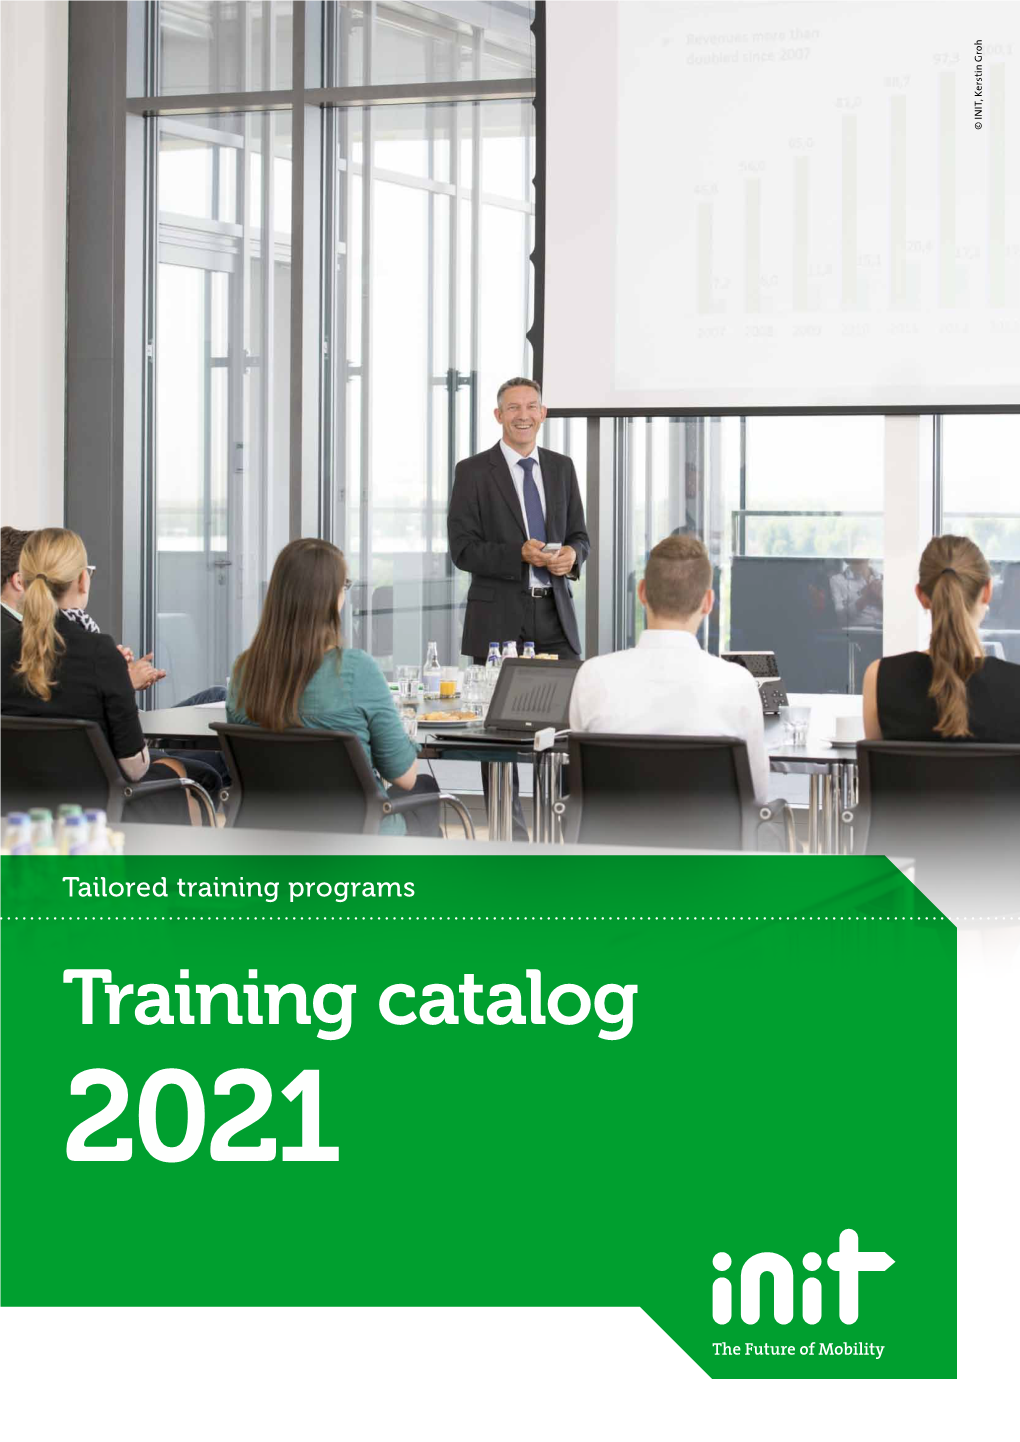 Training Catalog Tailored Training Programs